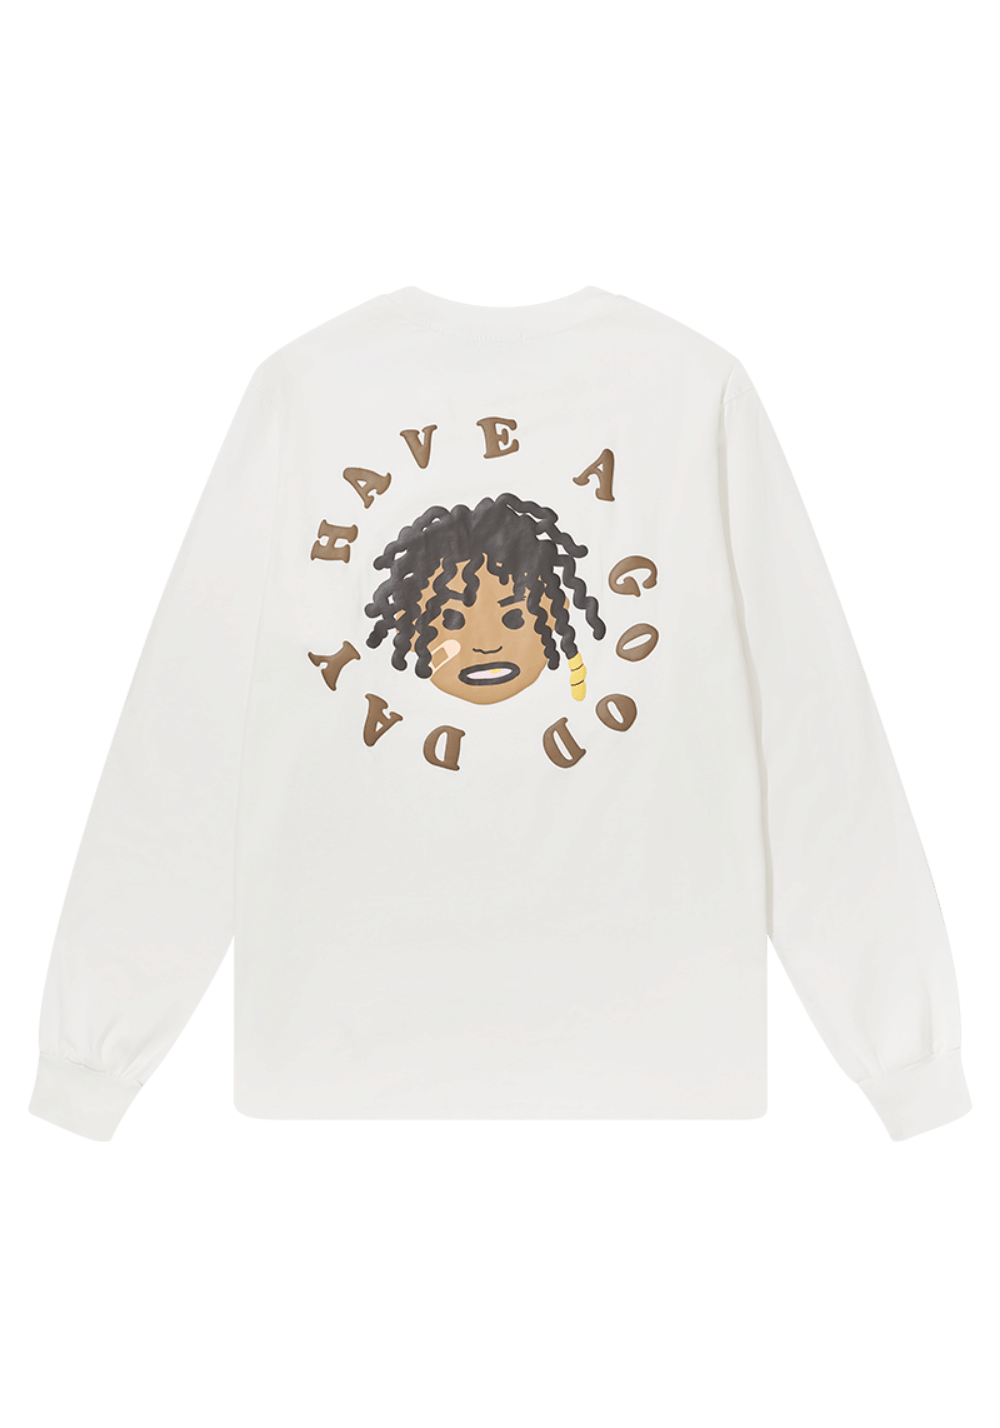 Dreadlocked Afro Print Sweatshirt - PSYLOS 1, Dreadlocked Afro Print Sweatshirt, Sweatshirts, HARSH AND CRUEL, PSYLOS 1